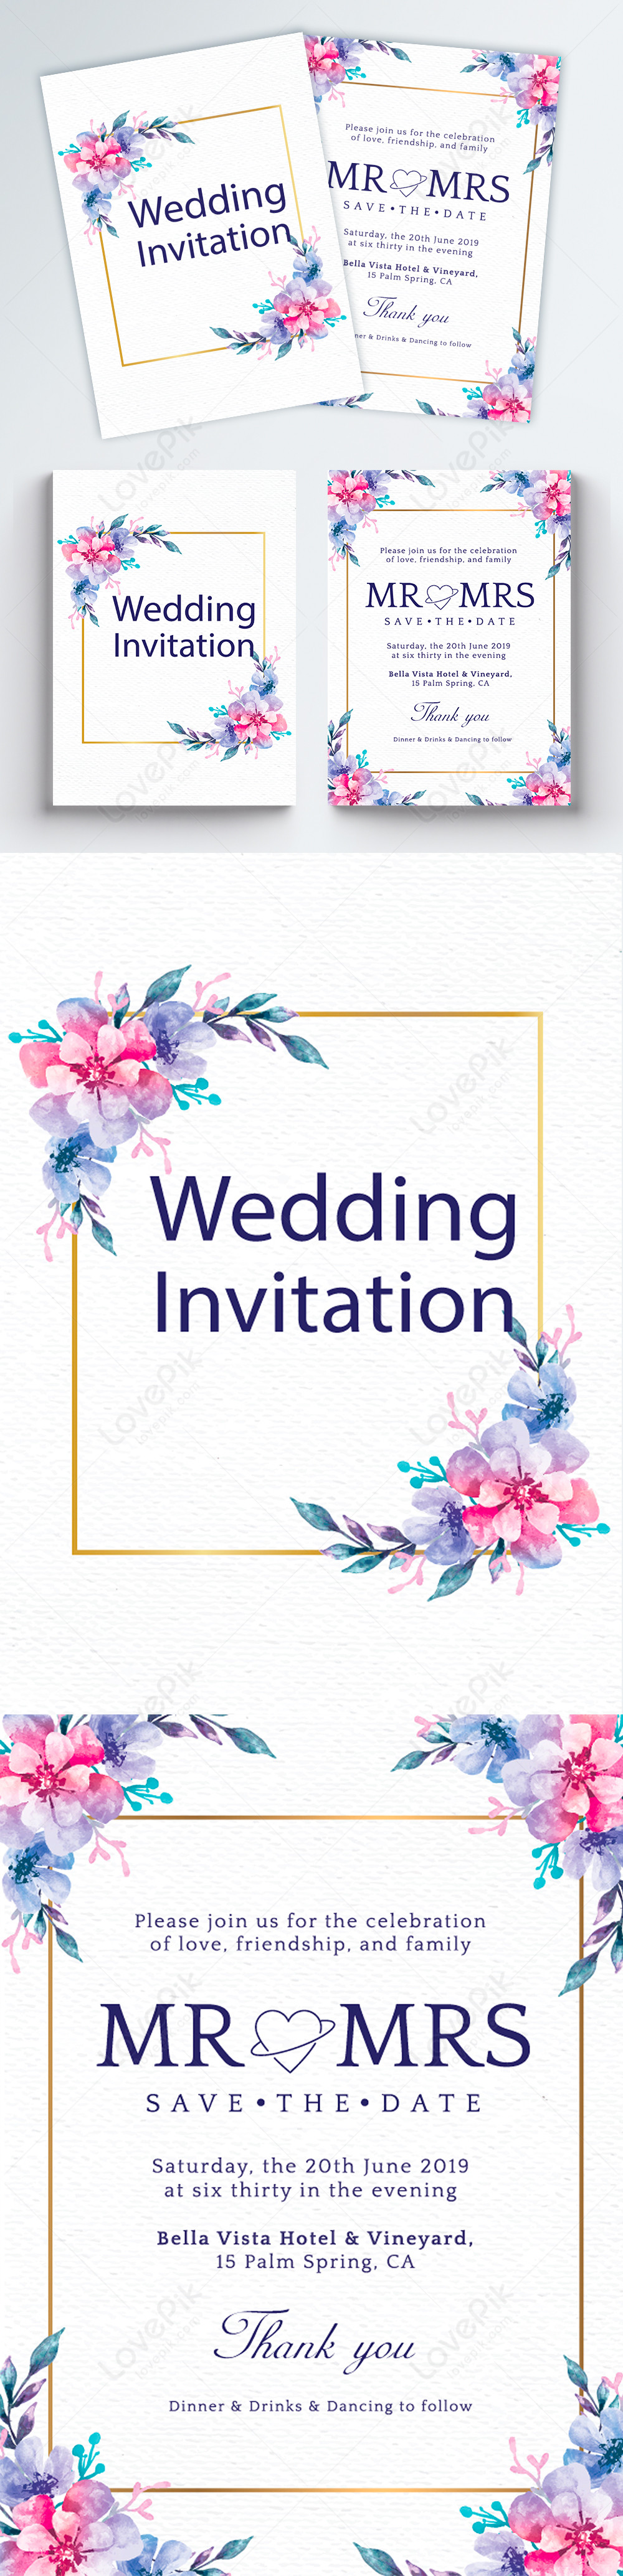 Invitation card design template template image_picture free download ...